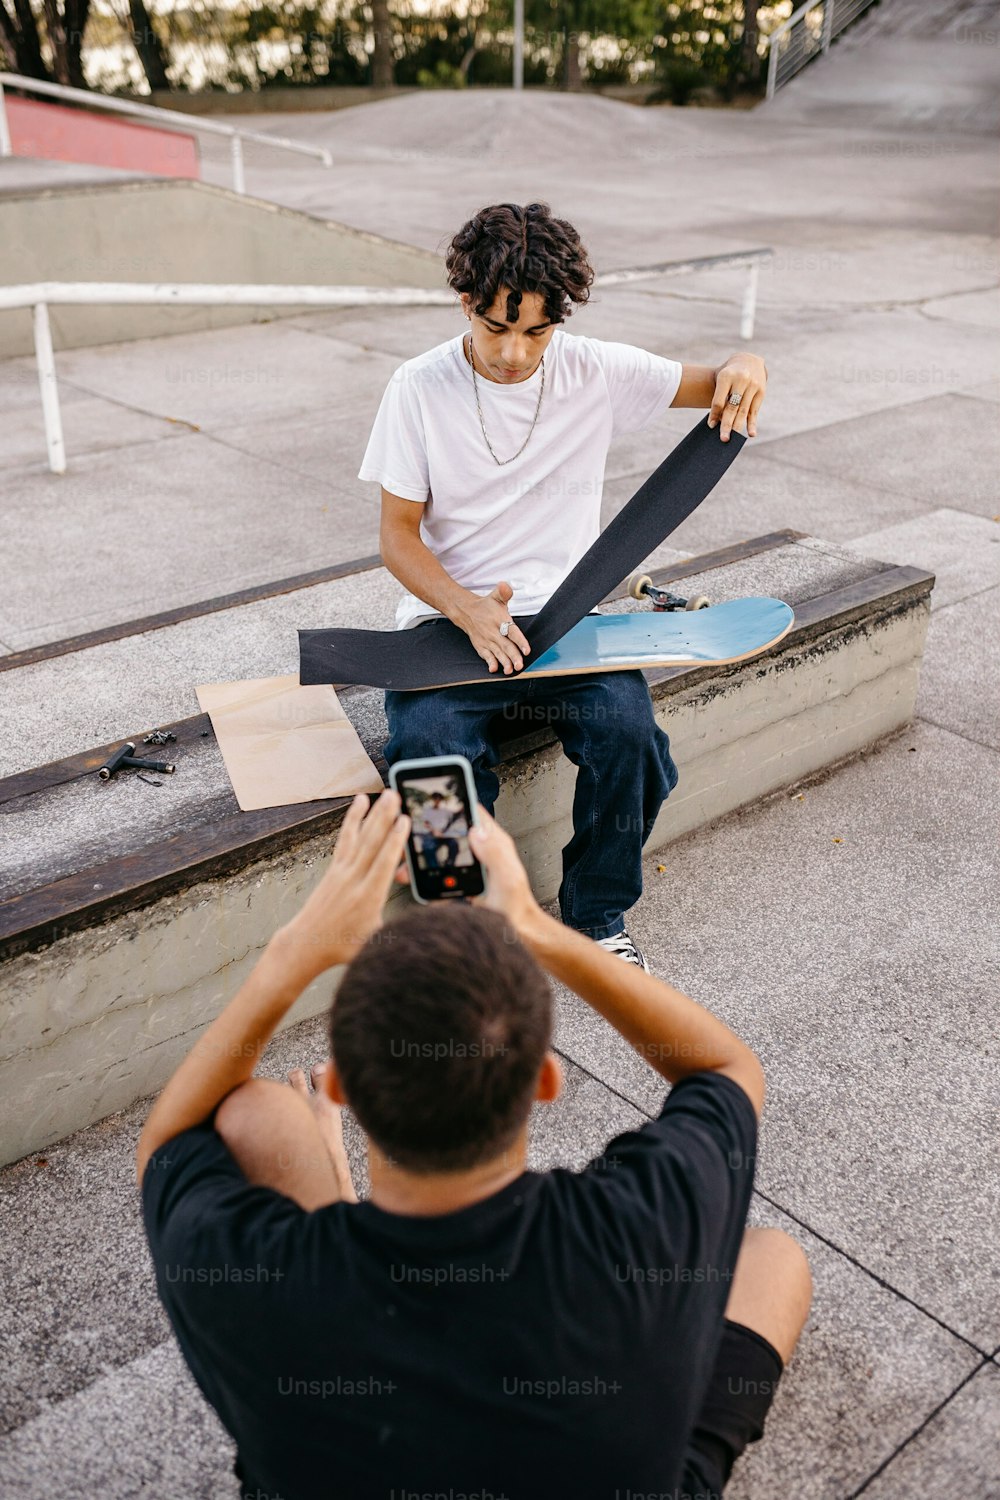 Un hombre tomando una foto de un skater